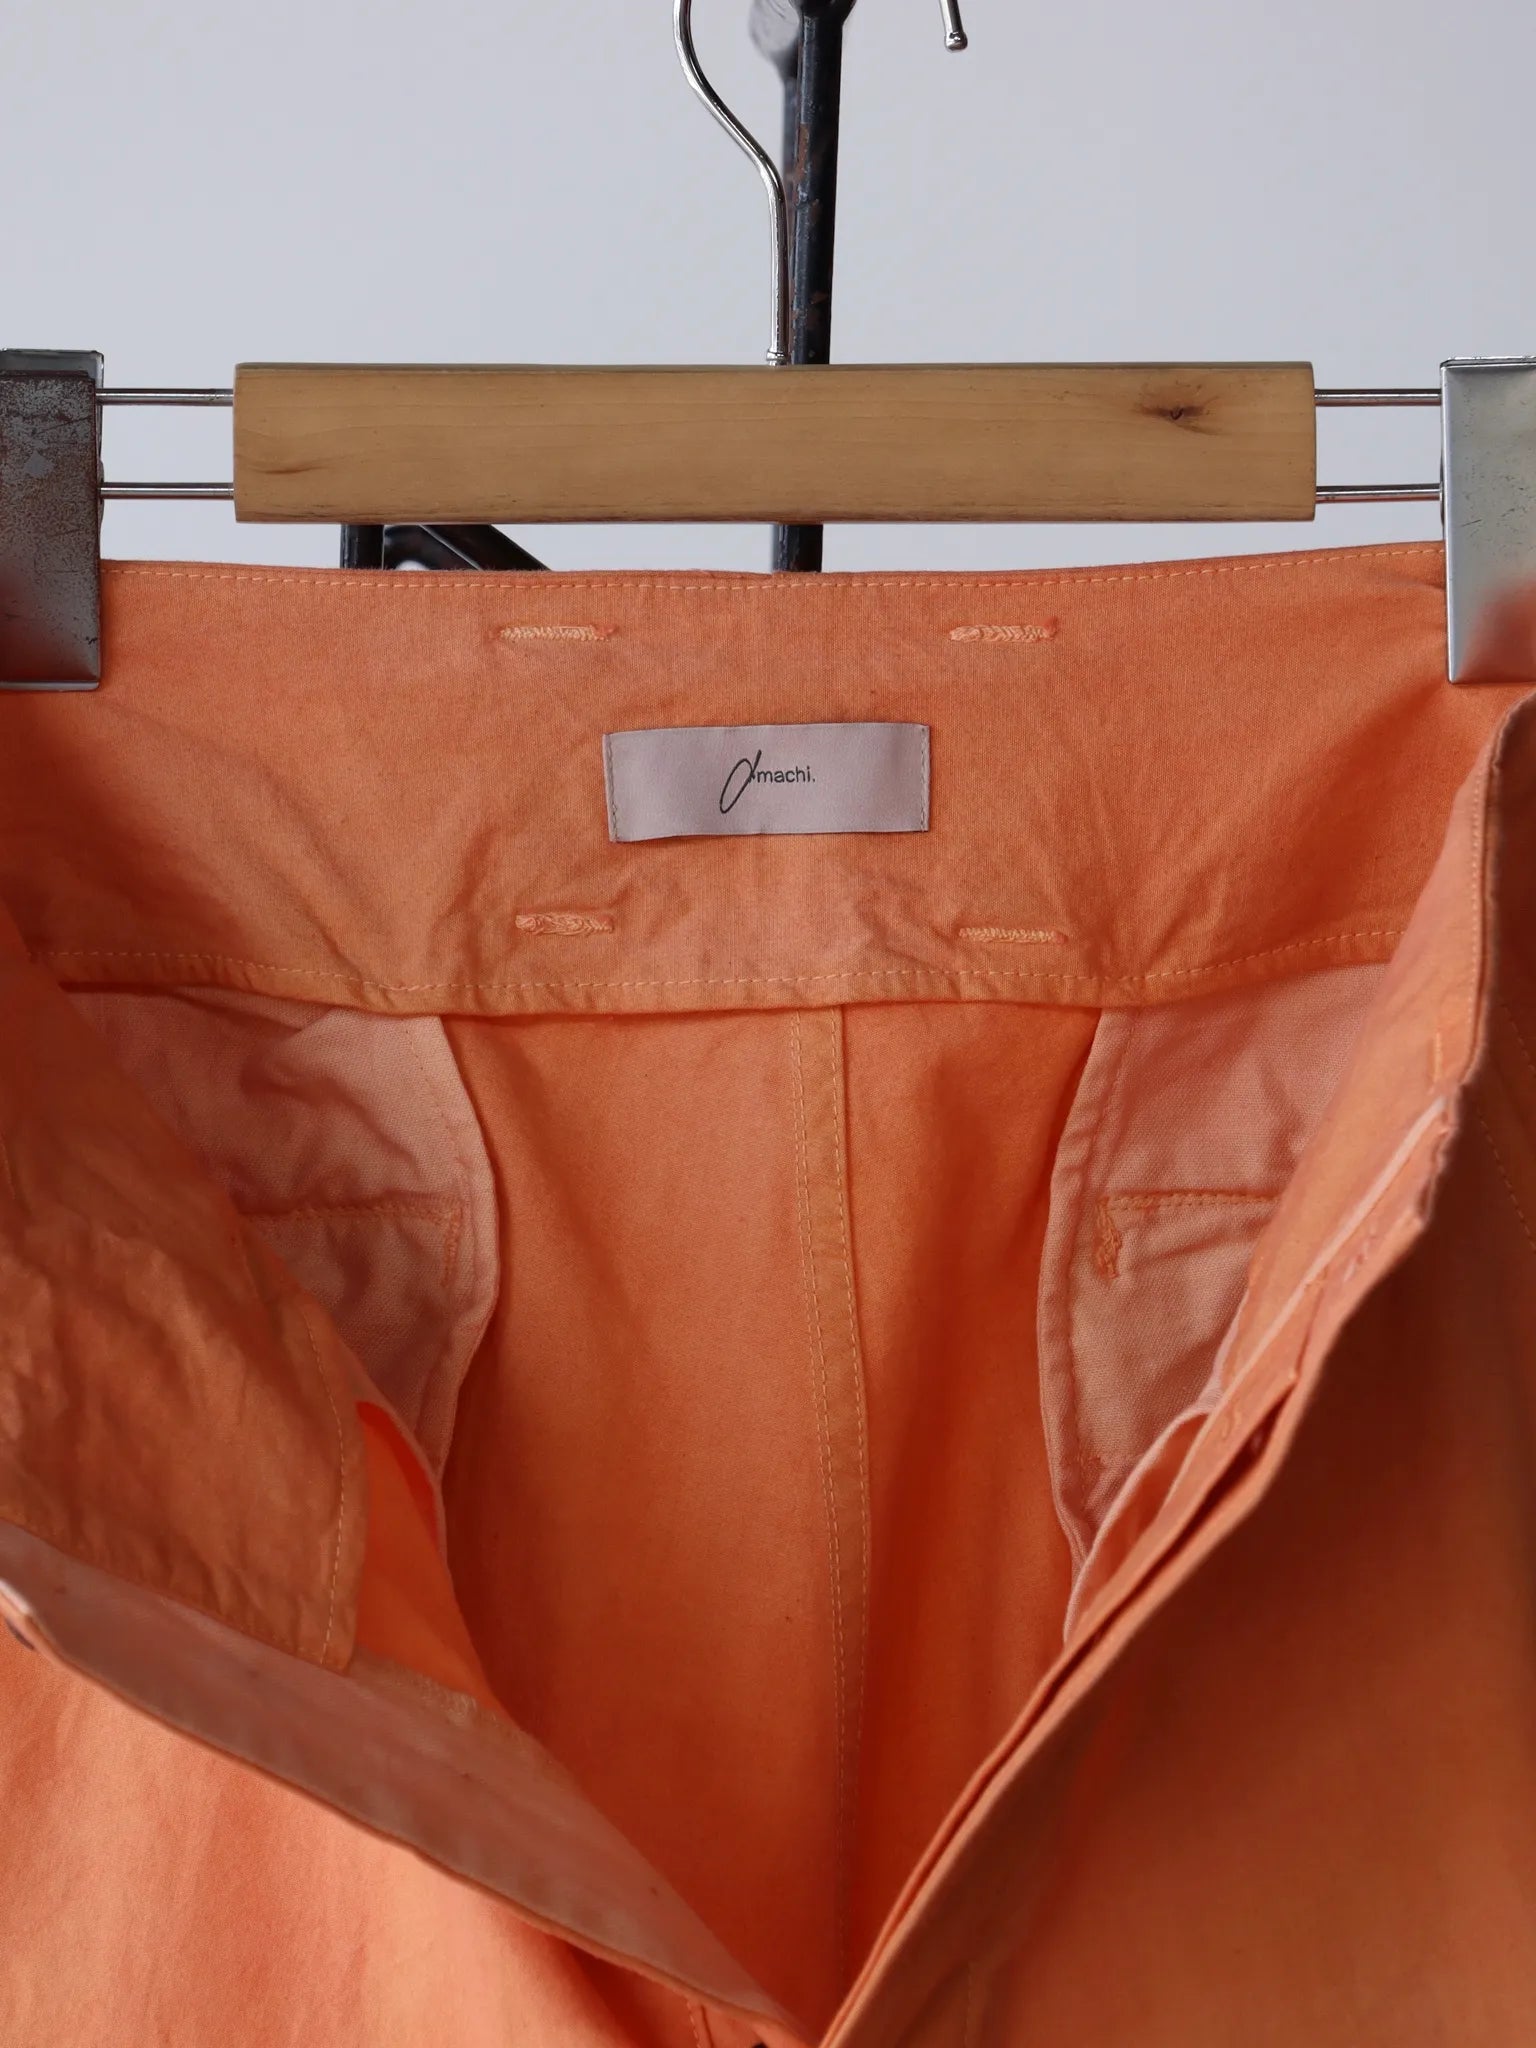 amachi-double-knee-cergo-pants-light-weight-orange-7